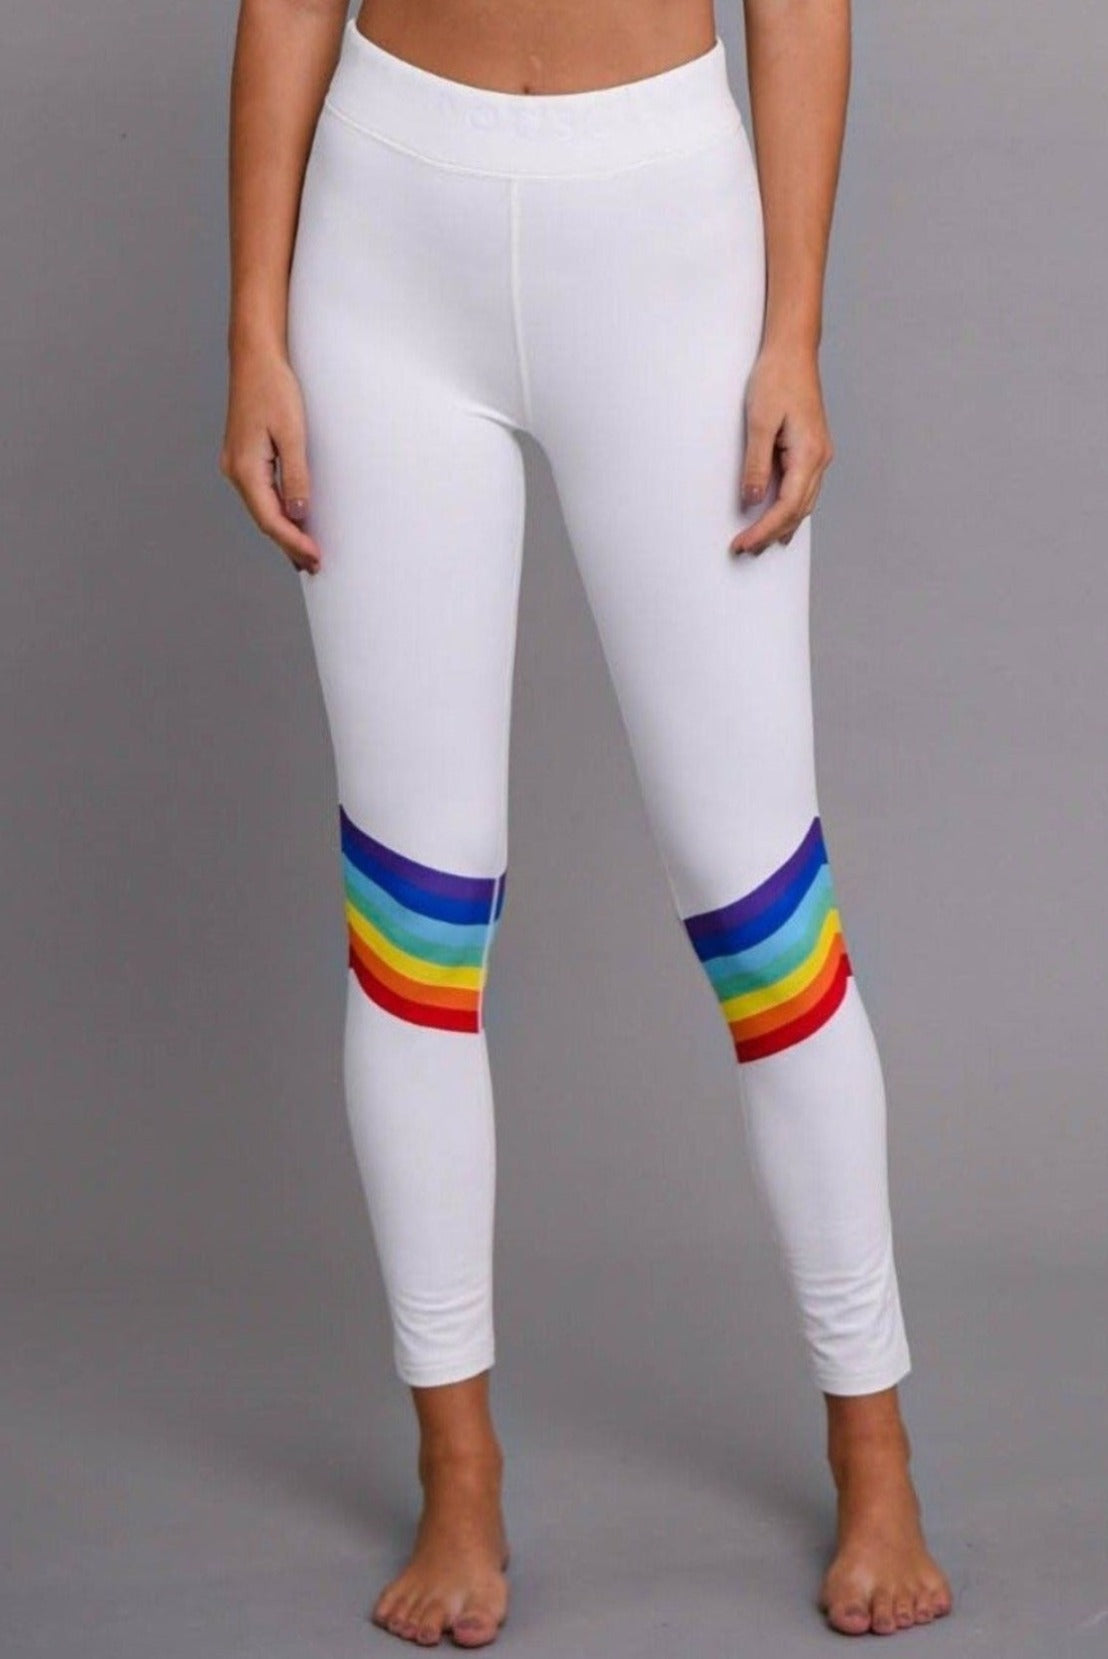 oosc womens white rainbow ski base layer leggings